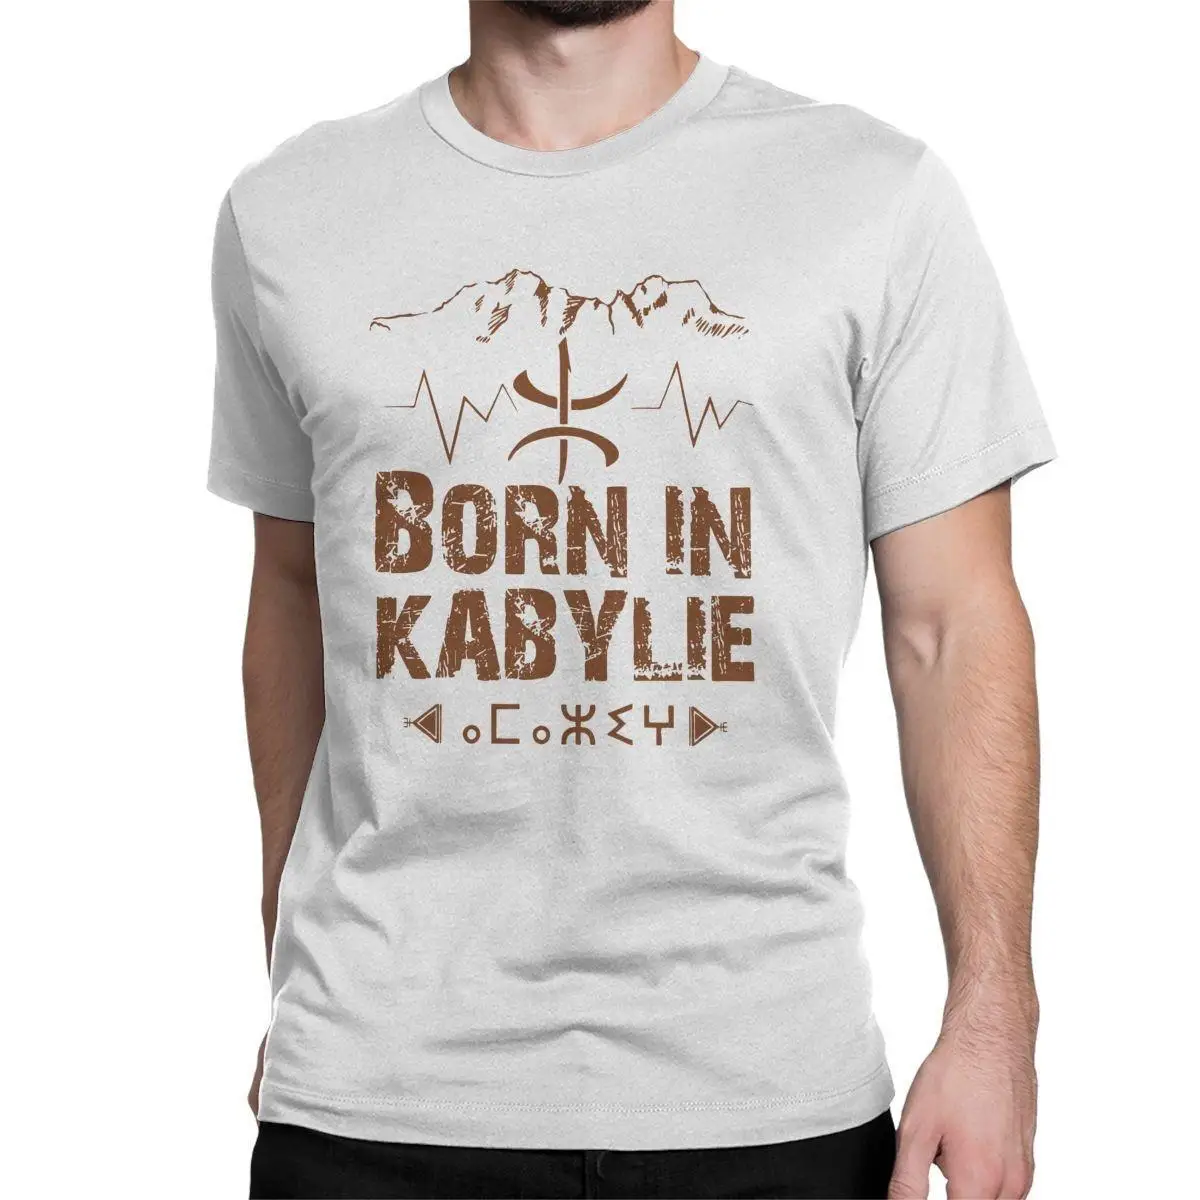 Men's T-Shirt Amazigh Born In Kabylie Vintage Cotton Tee Shirt Short Sleeve Berber Africa T Shirt Round Collar Clothes Original